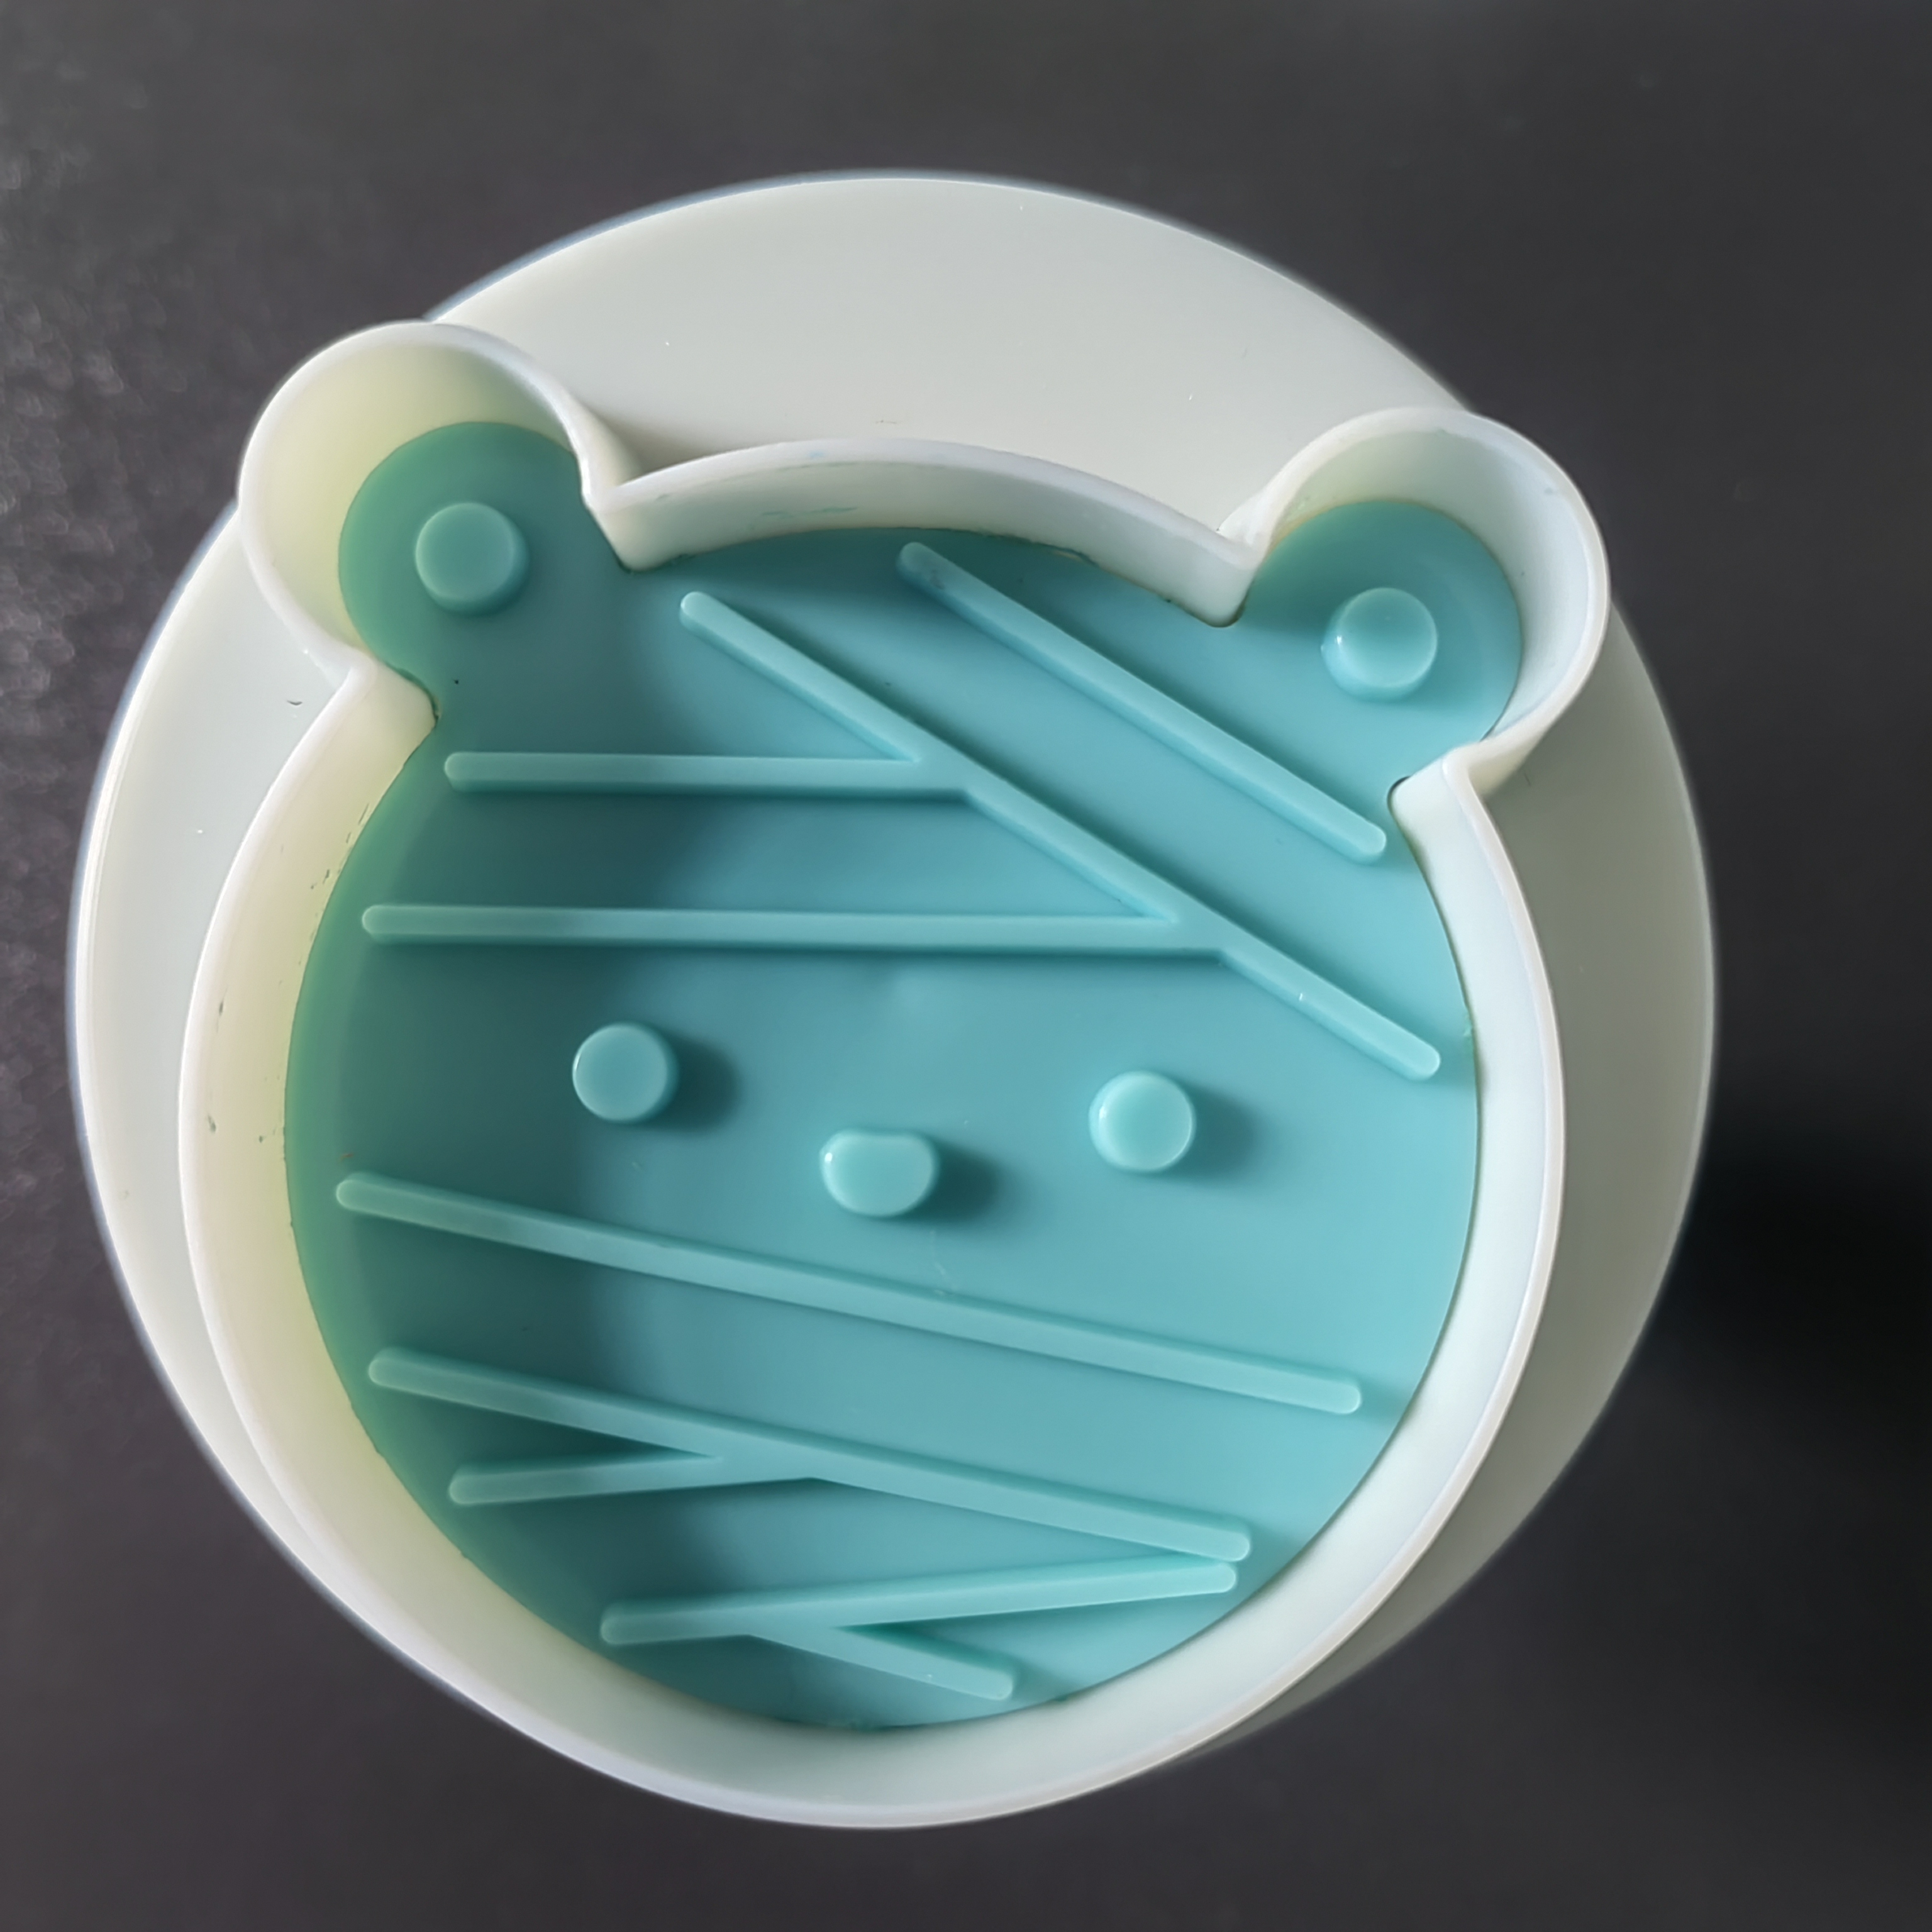 HB0151-6 Plastic 3pcs Ghost Series Cookie Molds set